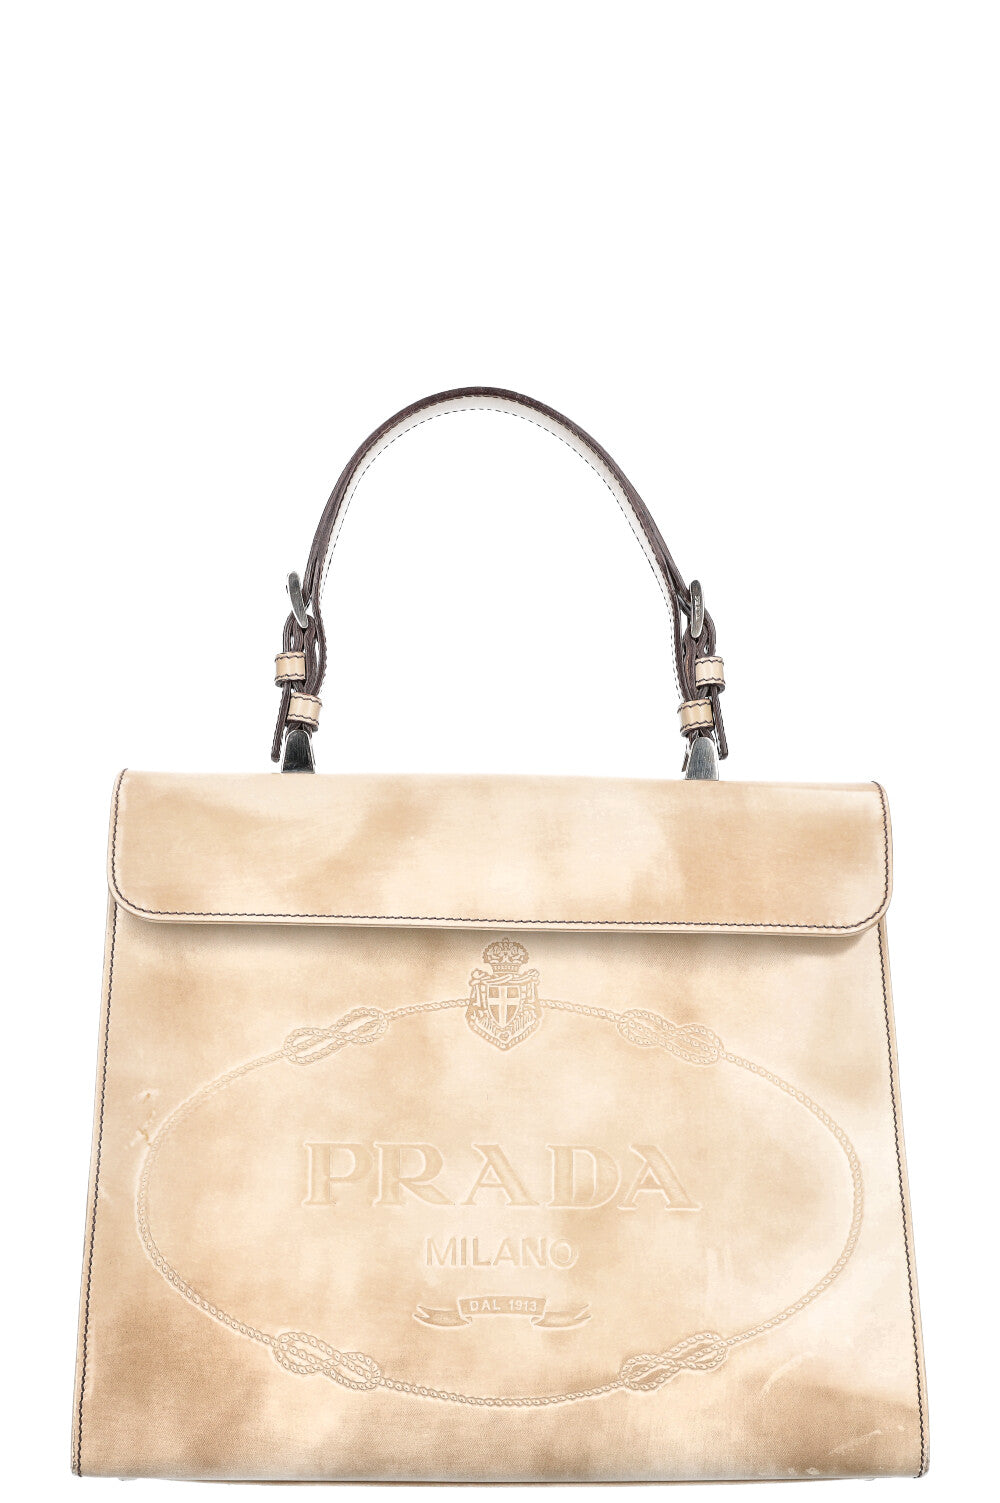 PRADA Logo Top Handle Flap Bag Beige